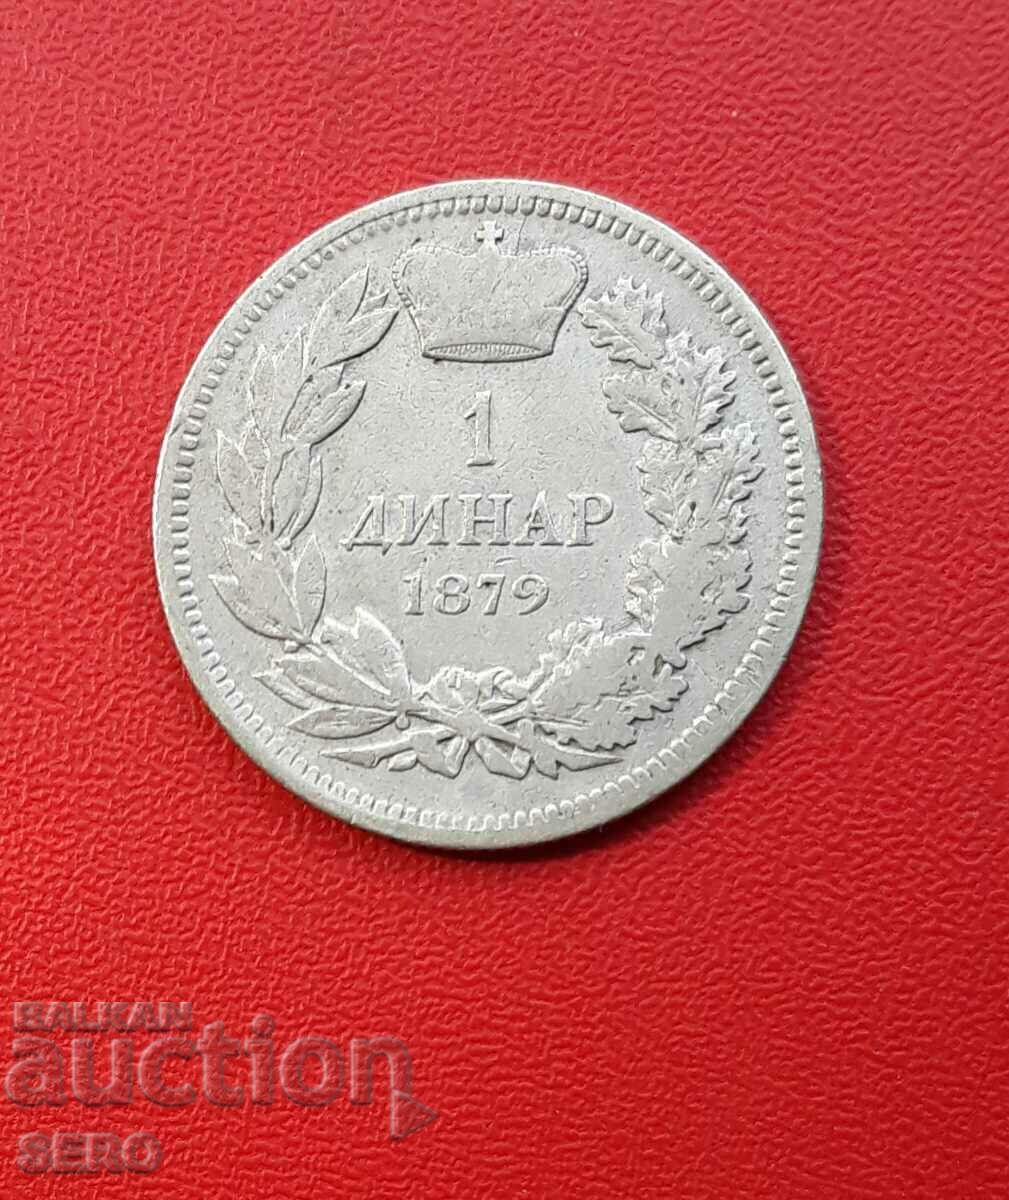 Serbia-1 dinar 1879